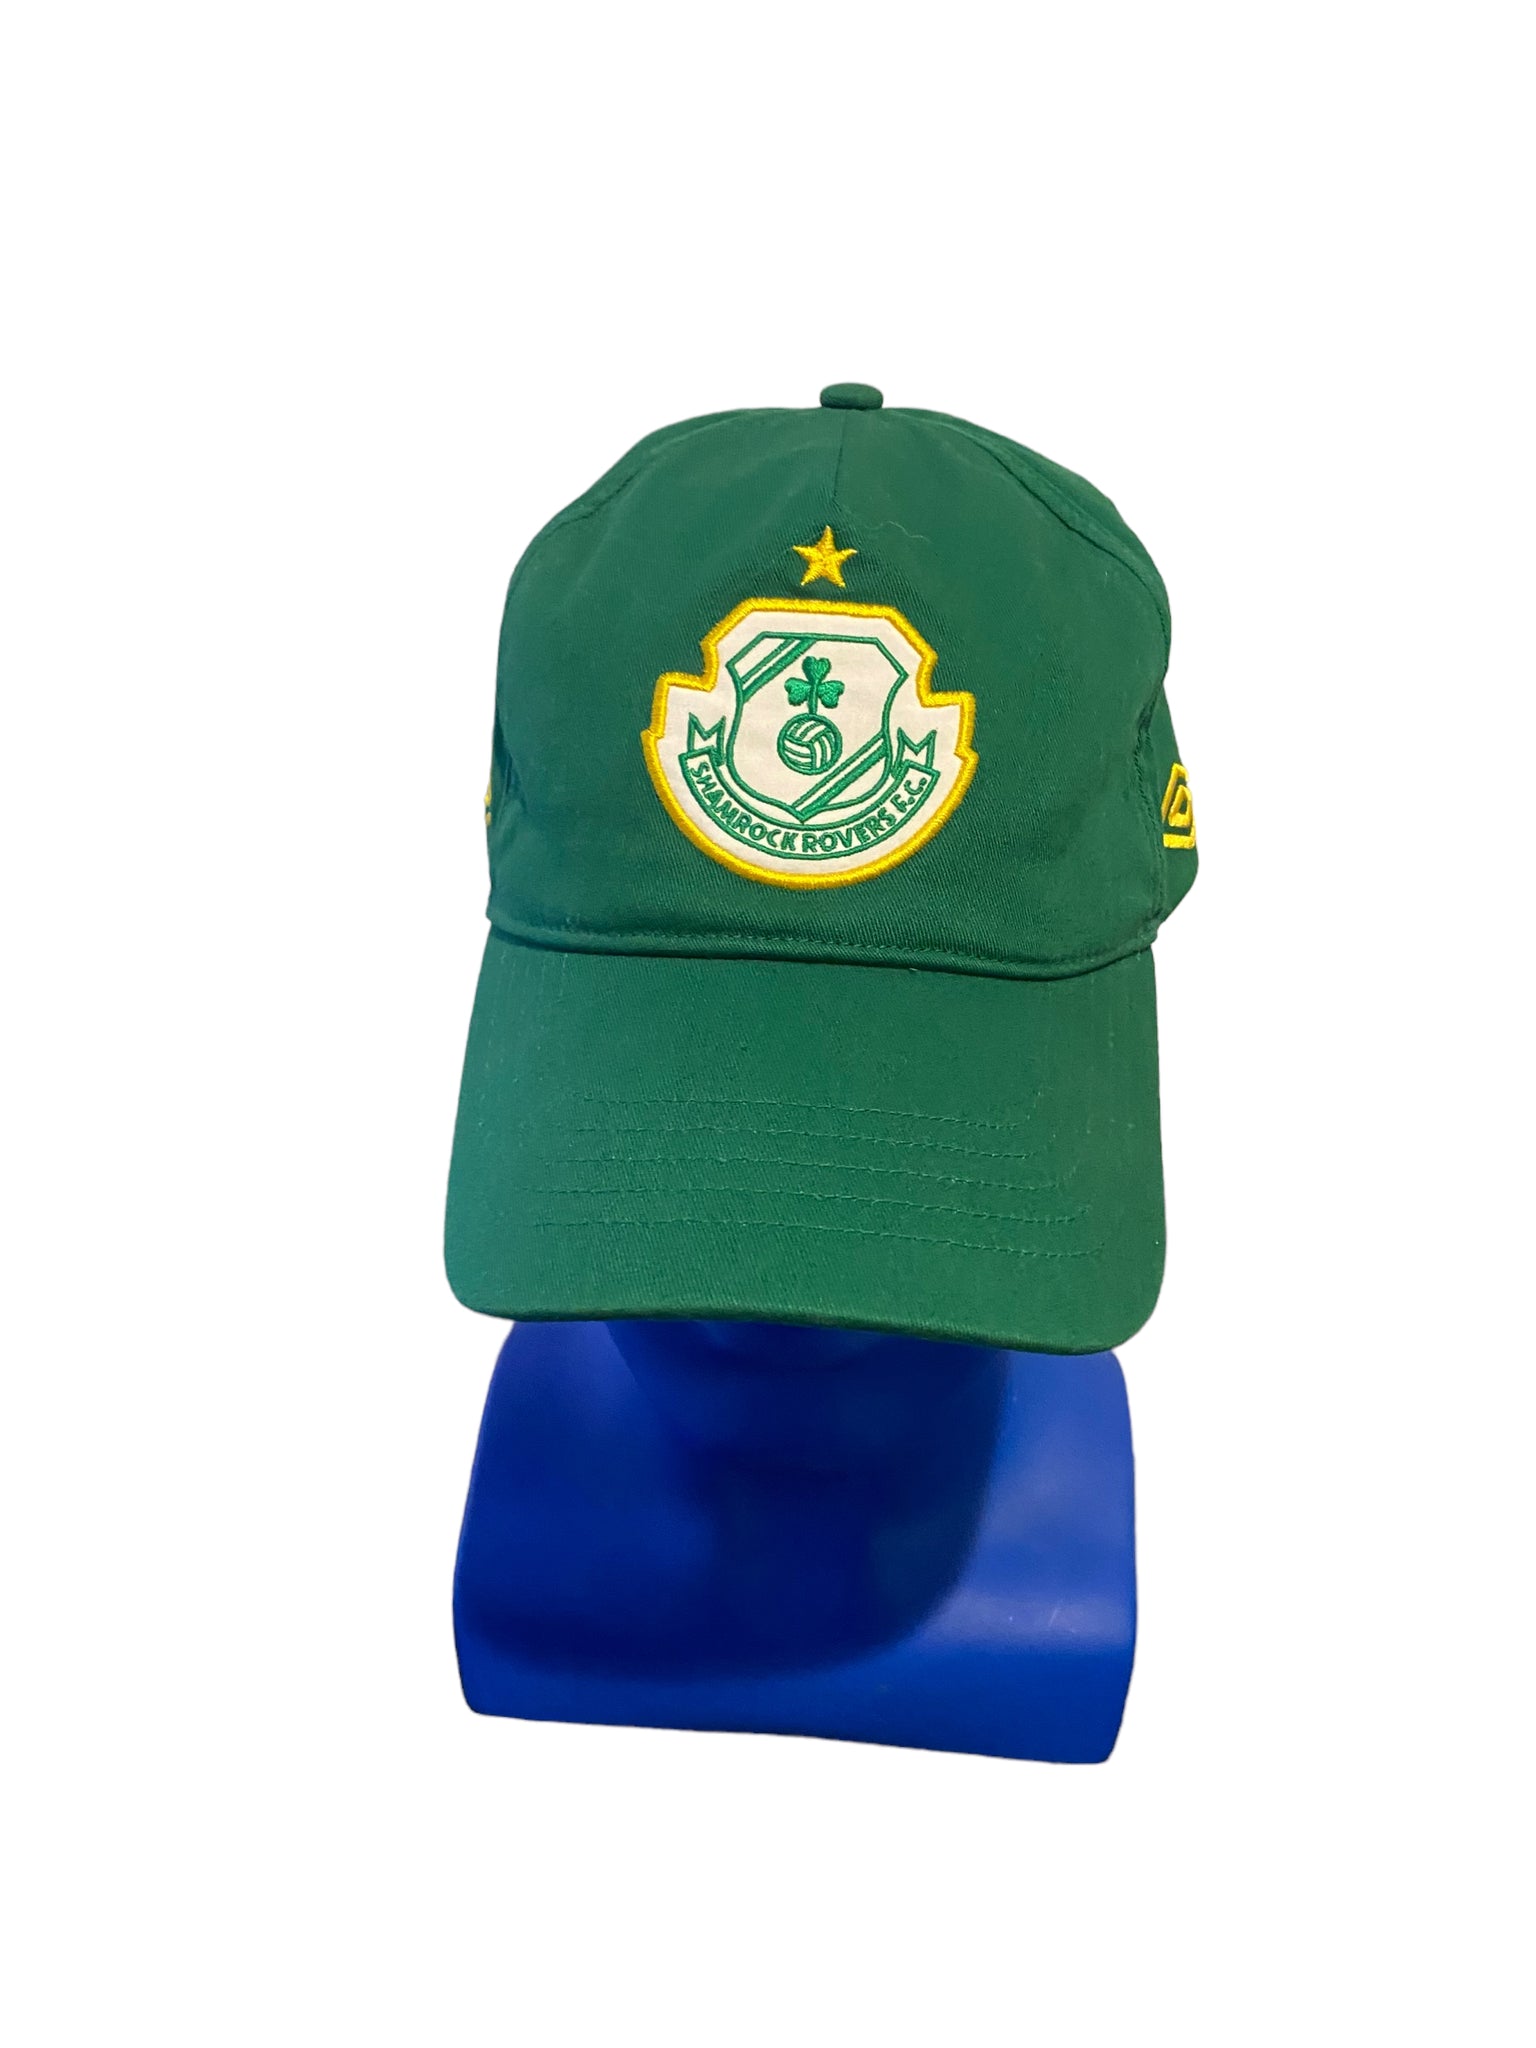 Umbro Shamrock Rovers F.c Patch Adjustable Strap Dad Hat Green